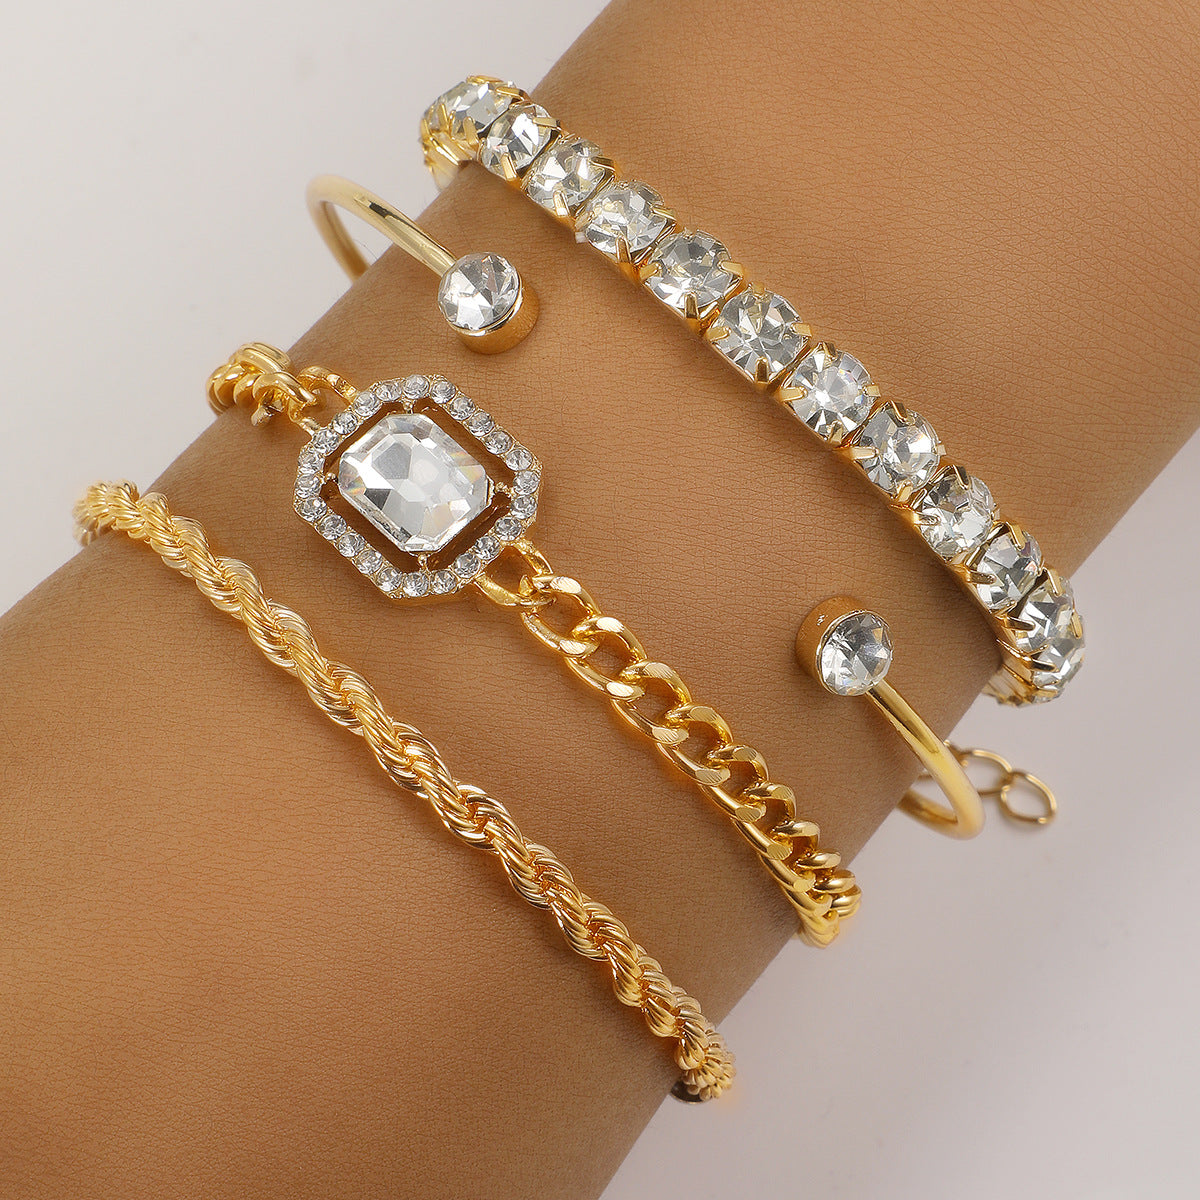 Fashion Jewelry 4 Pcs Crystal Bracelet Set Bohemian Design For Women